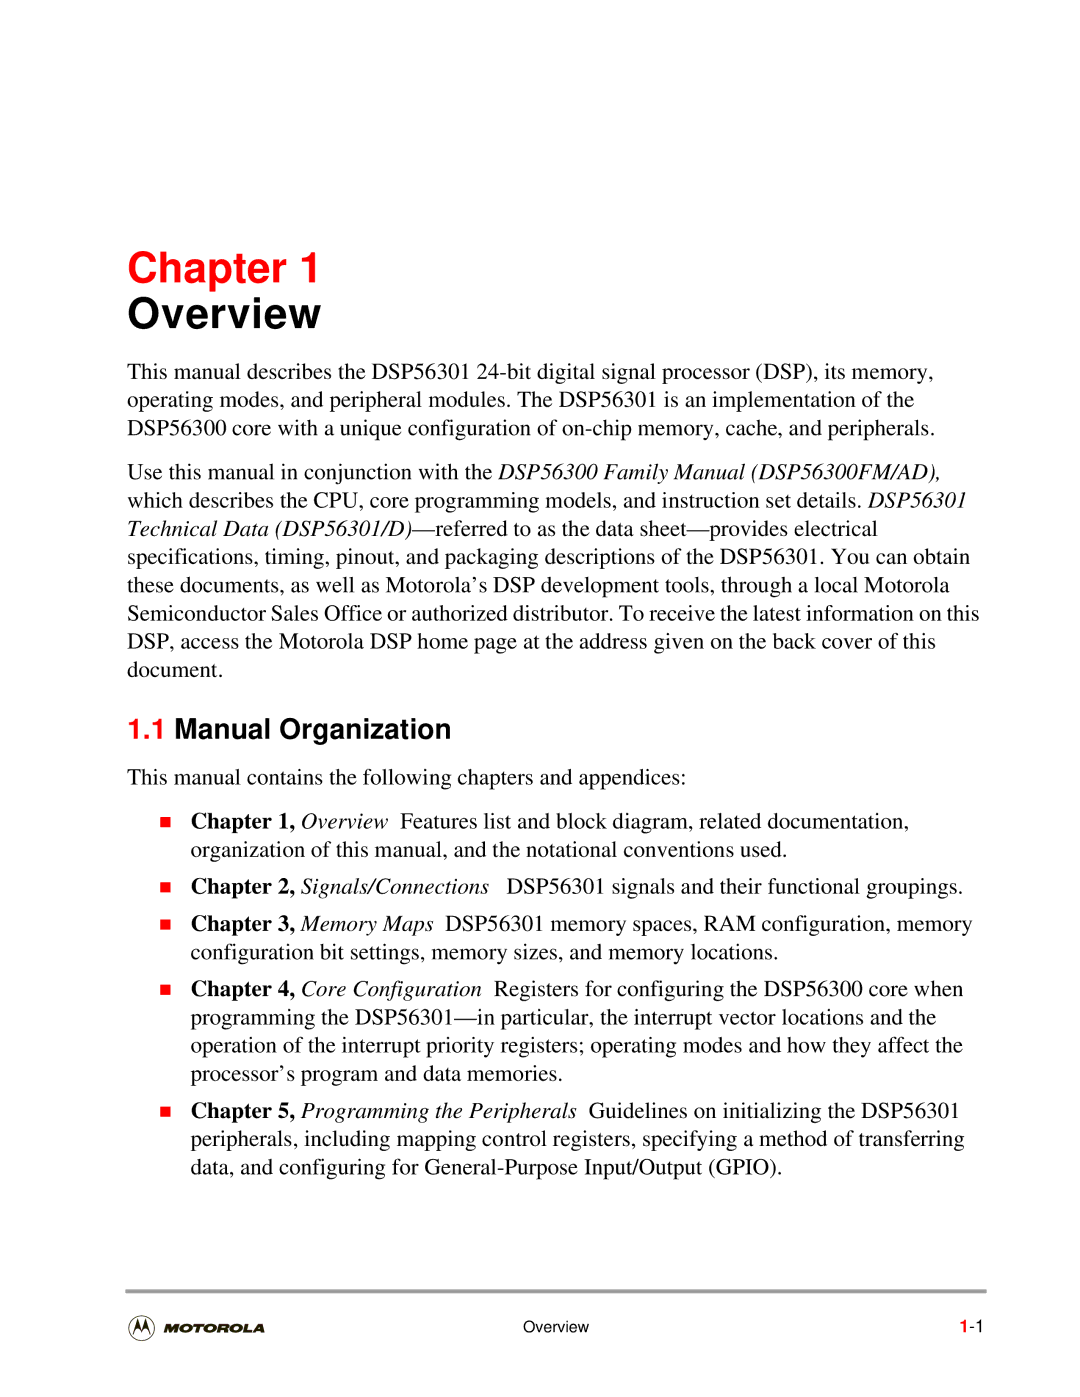 Motorola DSP56301 user manual Manual Organization, Overview 